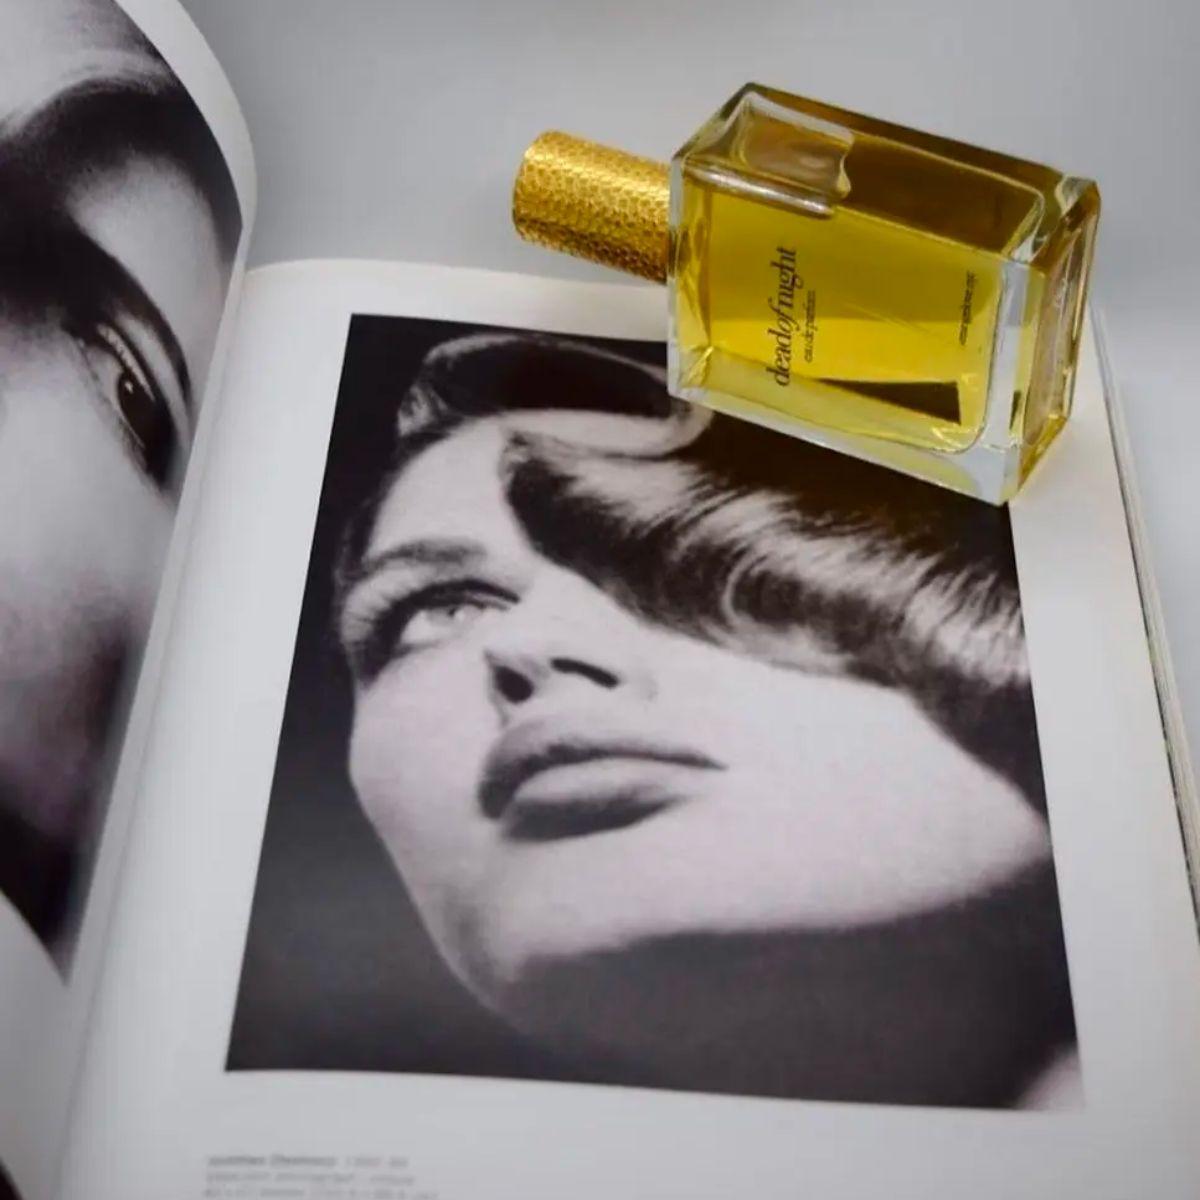 Image of the perfume deadofnight 50 ml by the perfume brand Strangelove NYC